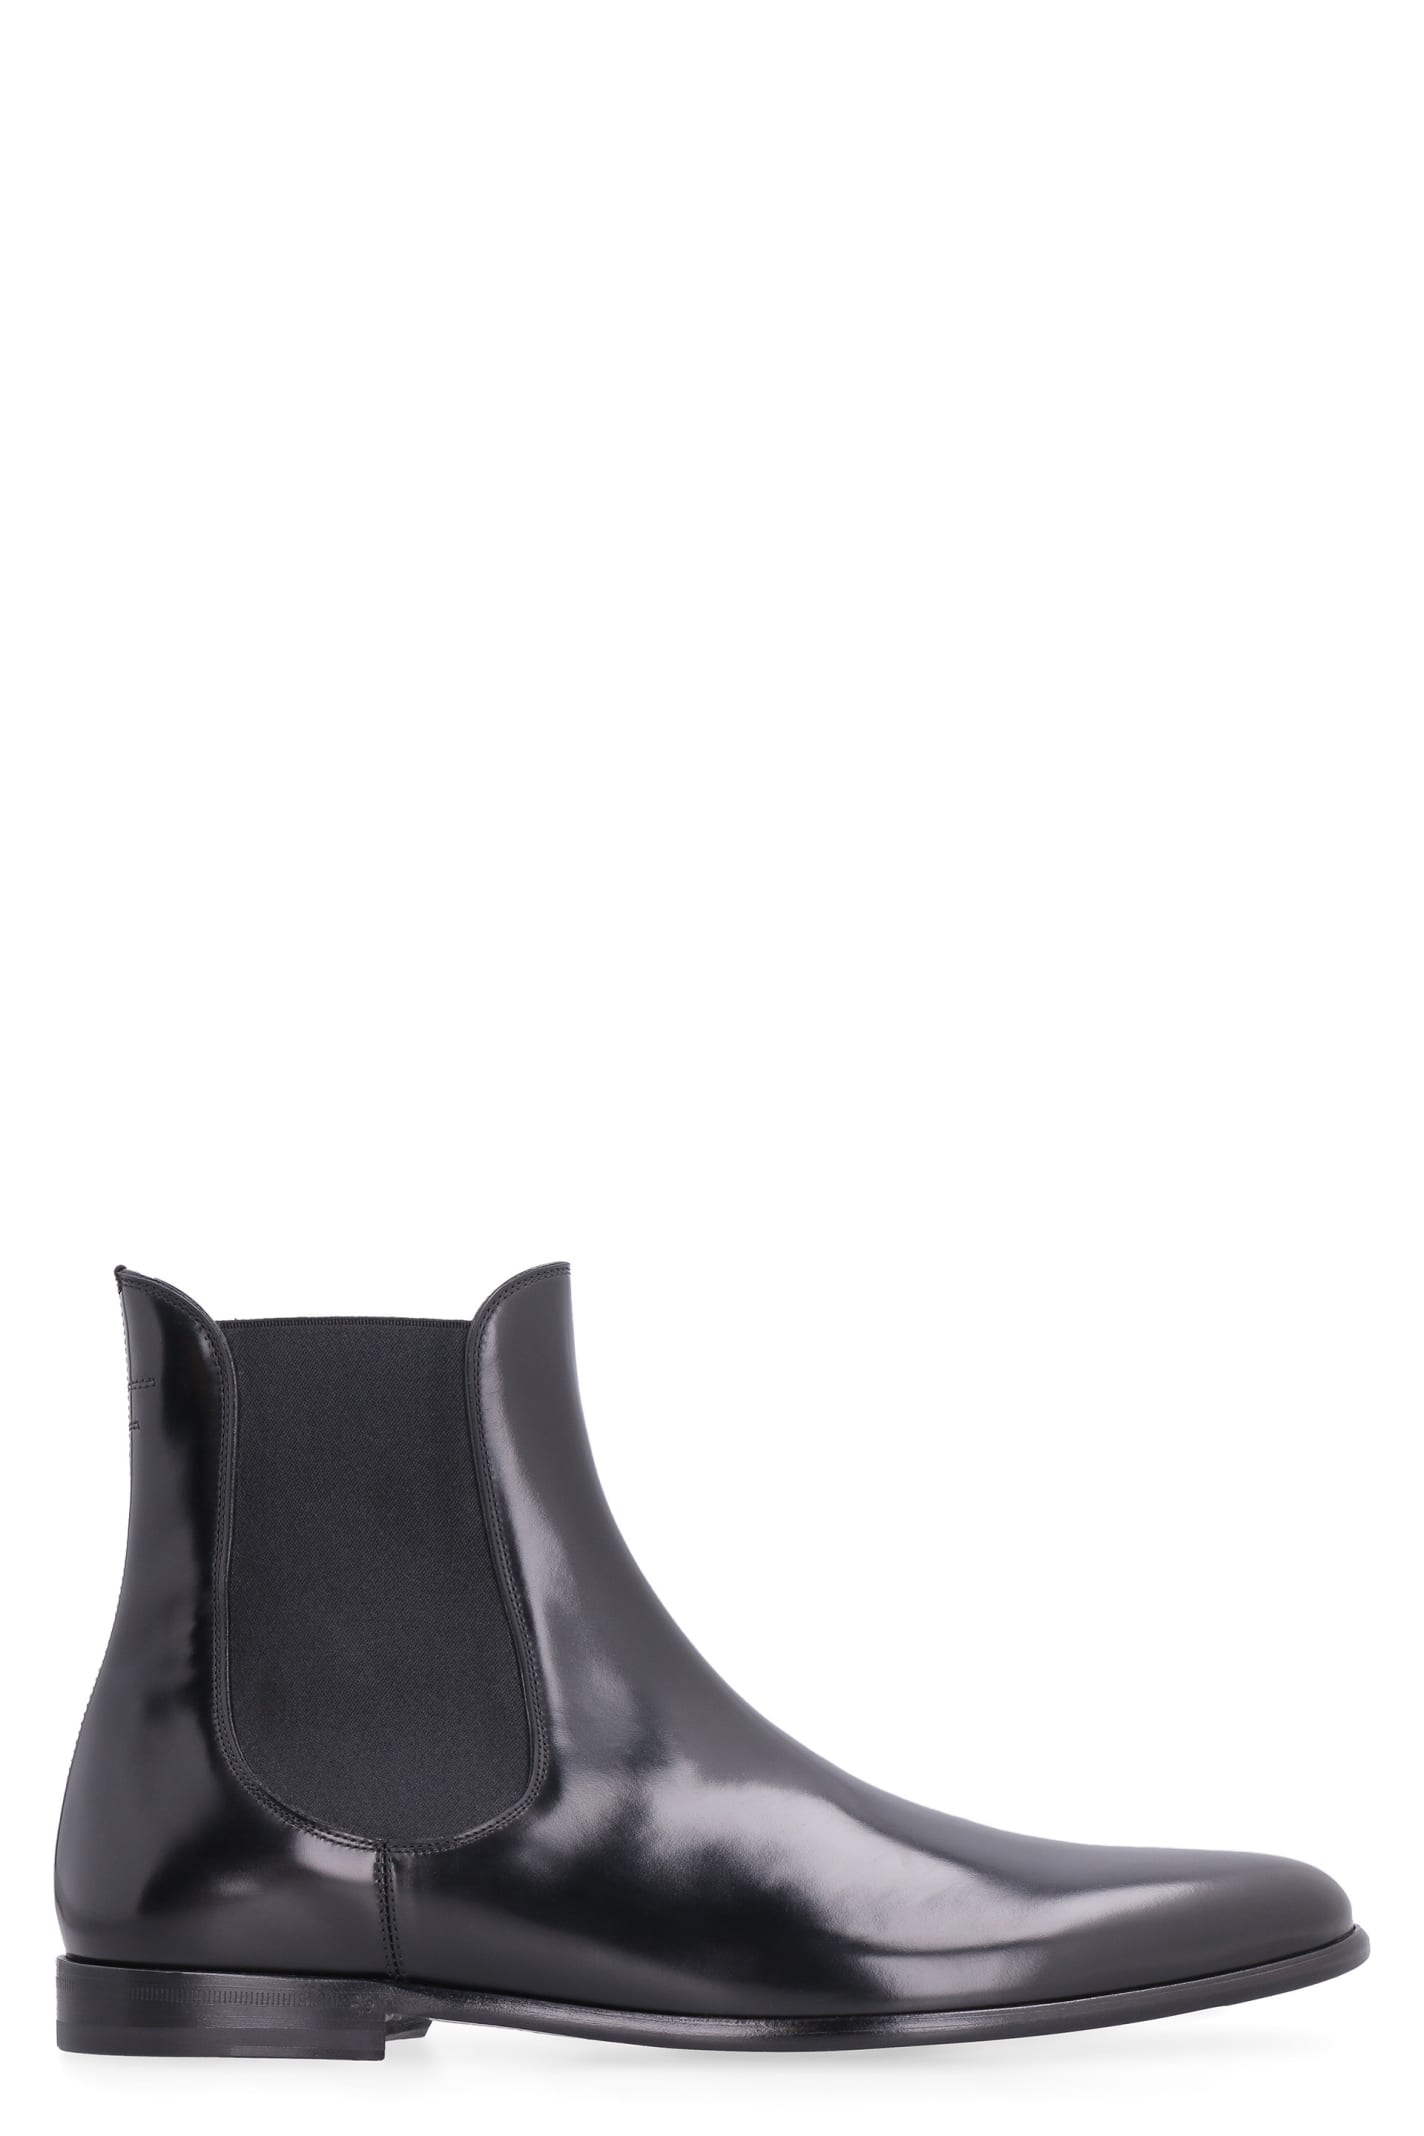 Dolce & Gabbana Spazzolato Leather Chelsea Boots